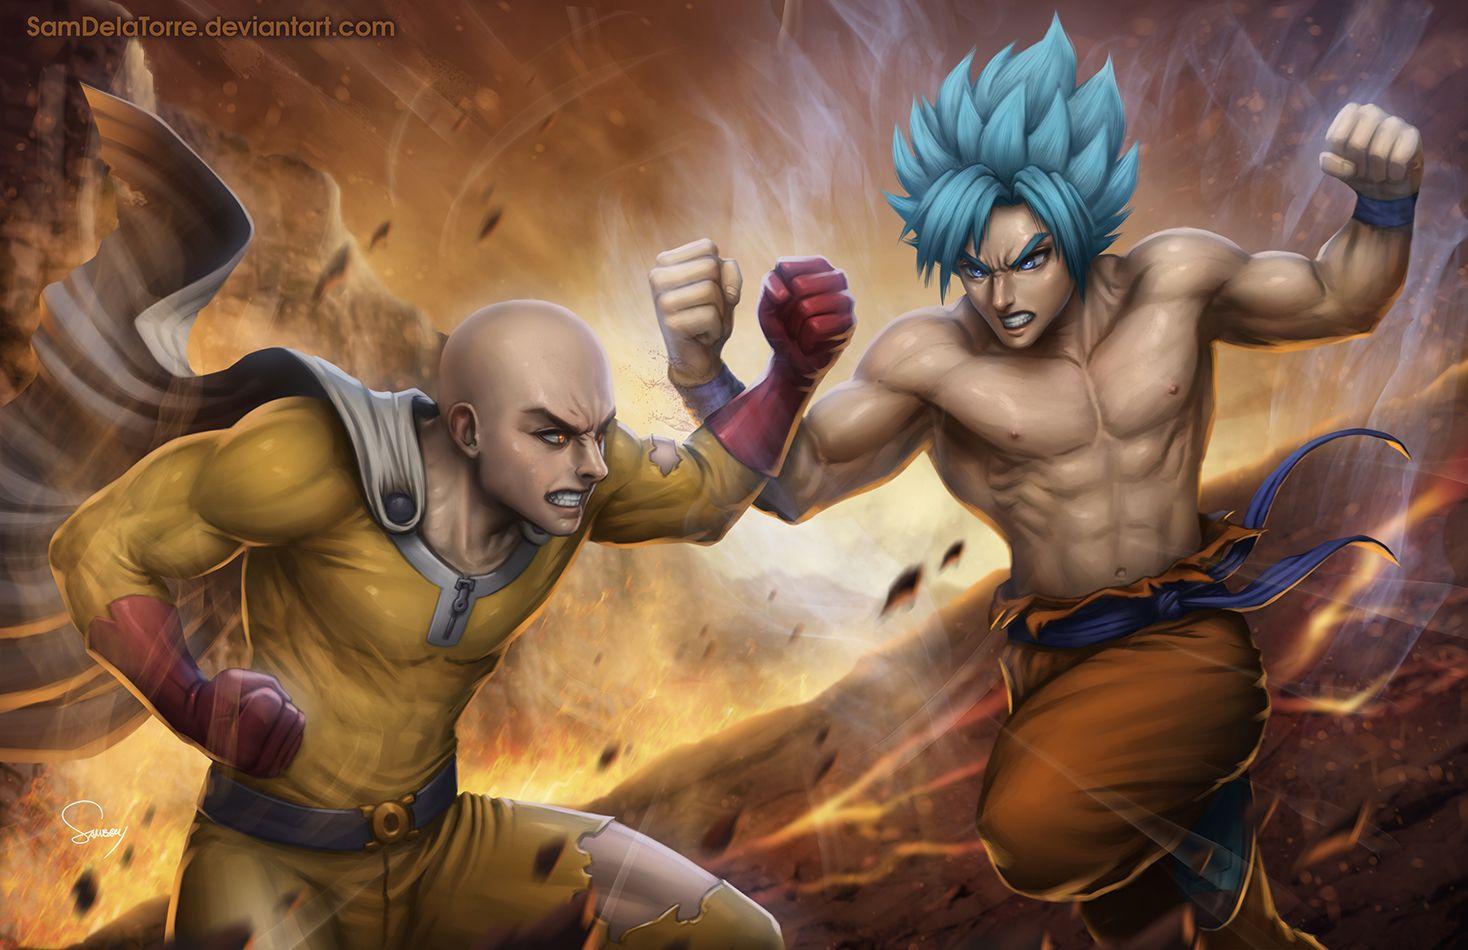 The Crossover Manga Anime, Saitama (One Punch Man) VS Son Goku